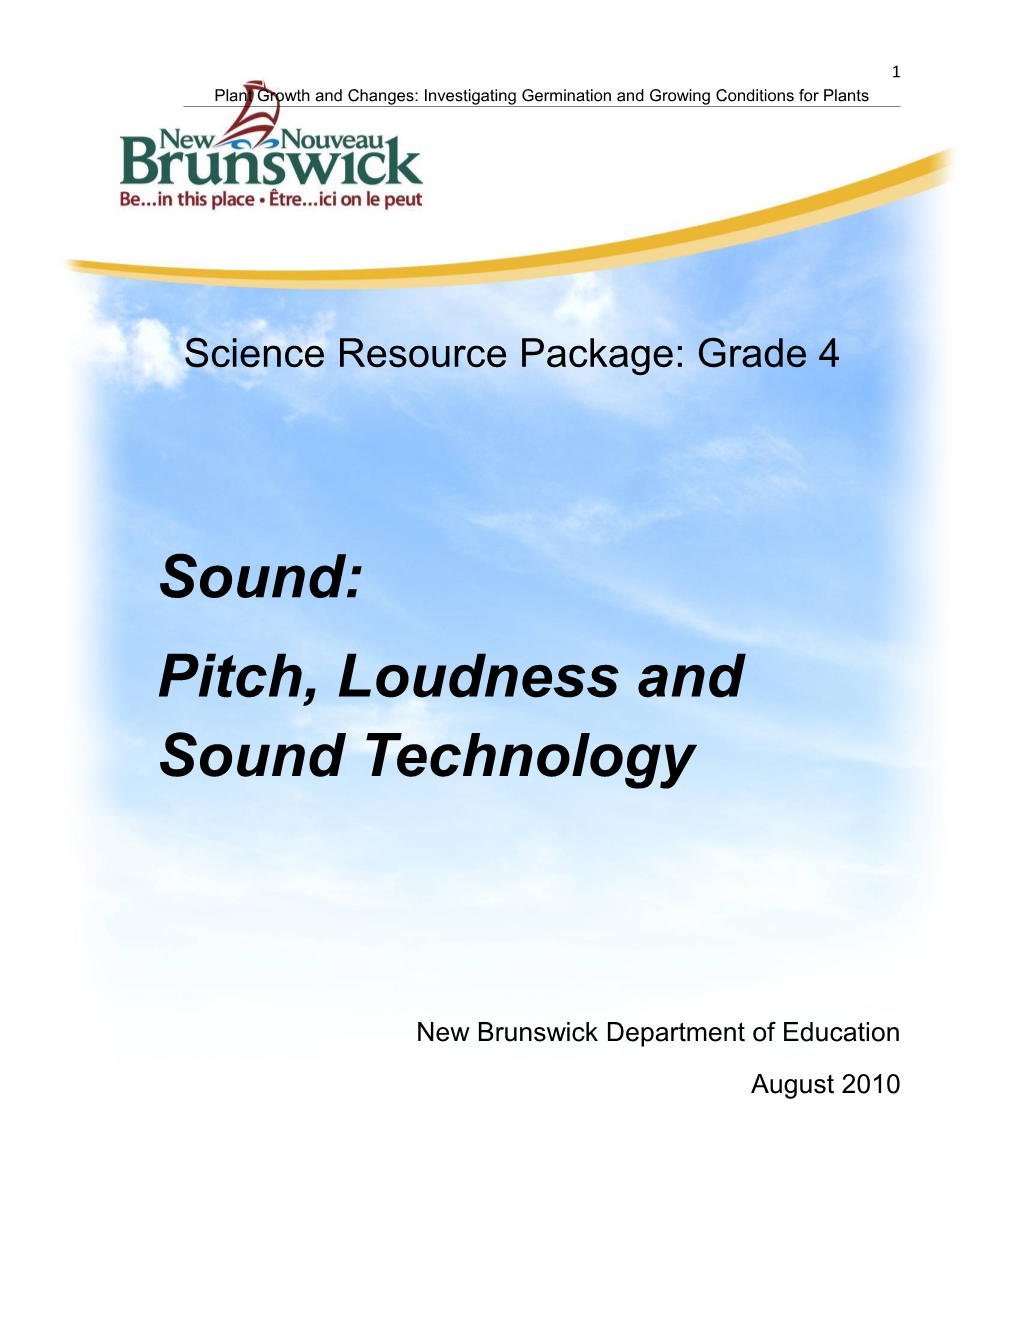 Sound - Pitch, Loudness and Sound Technology